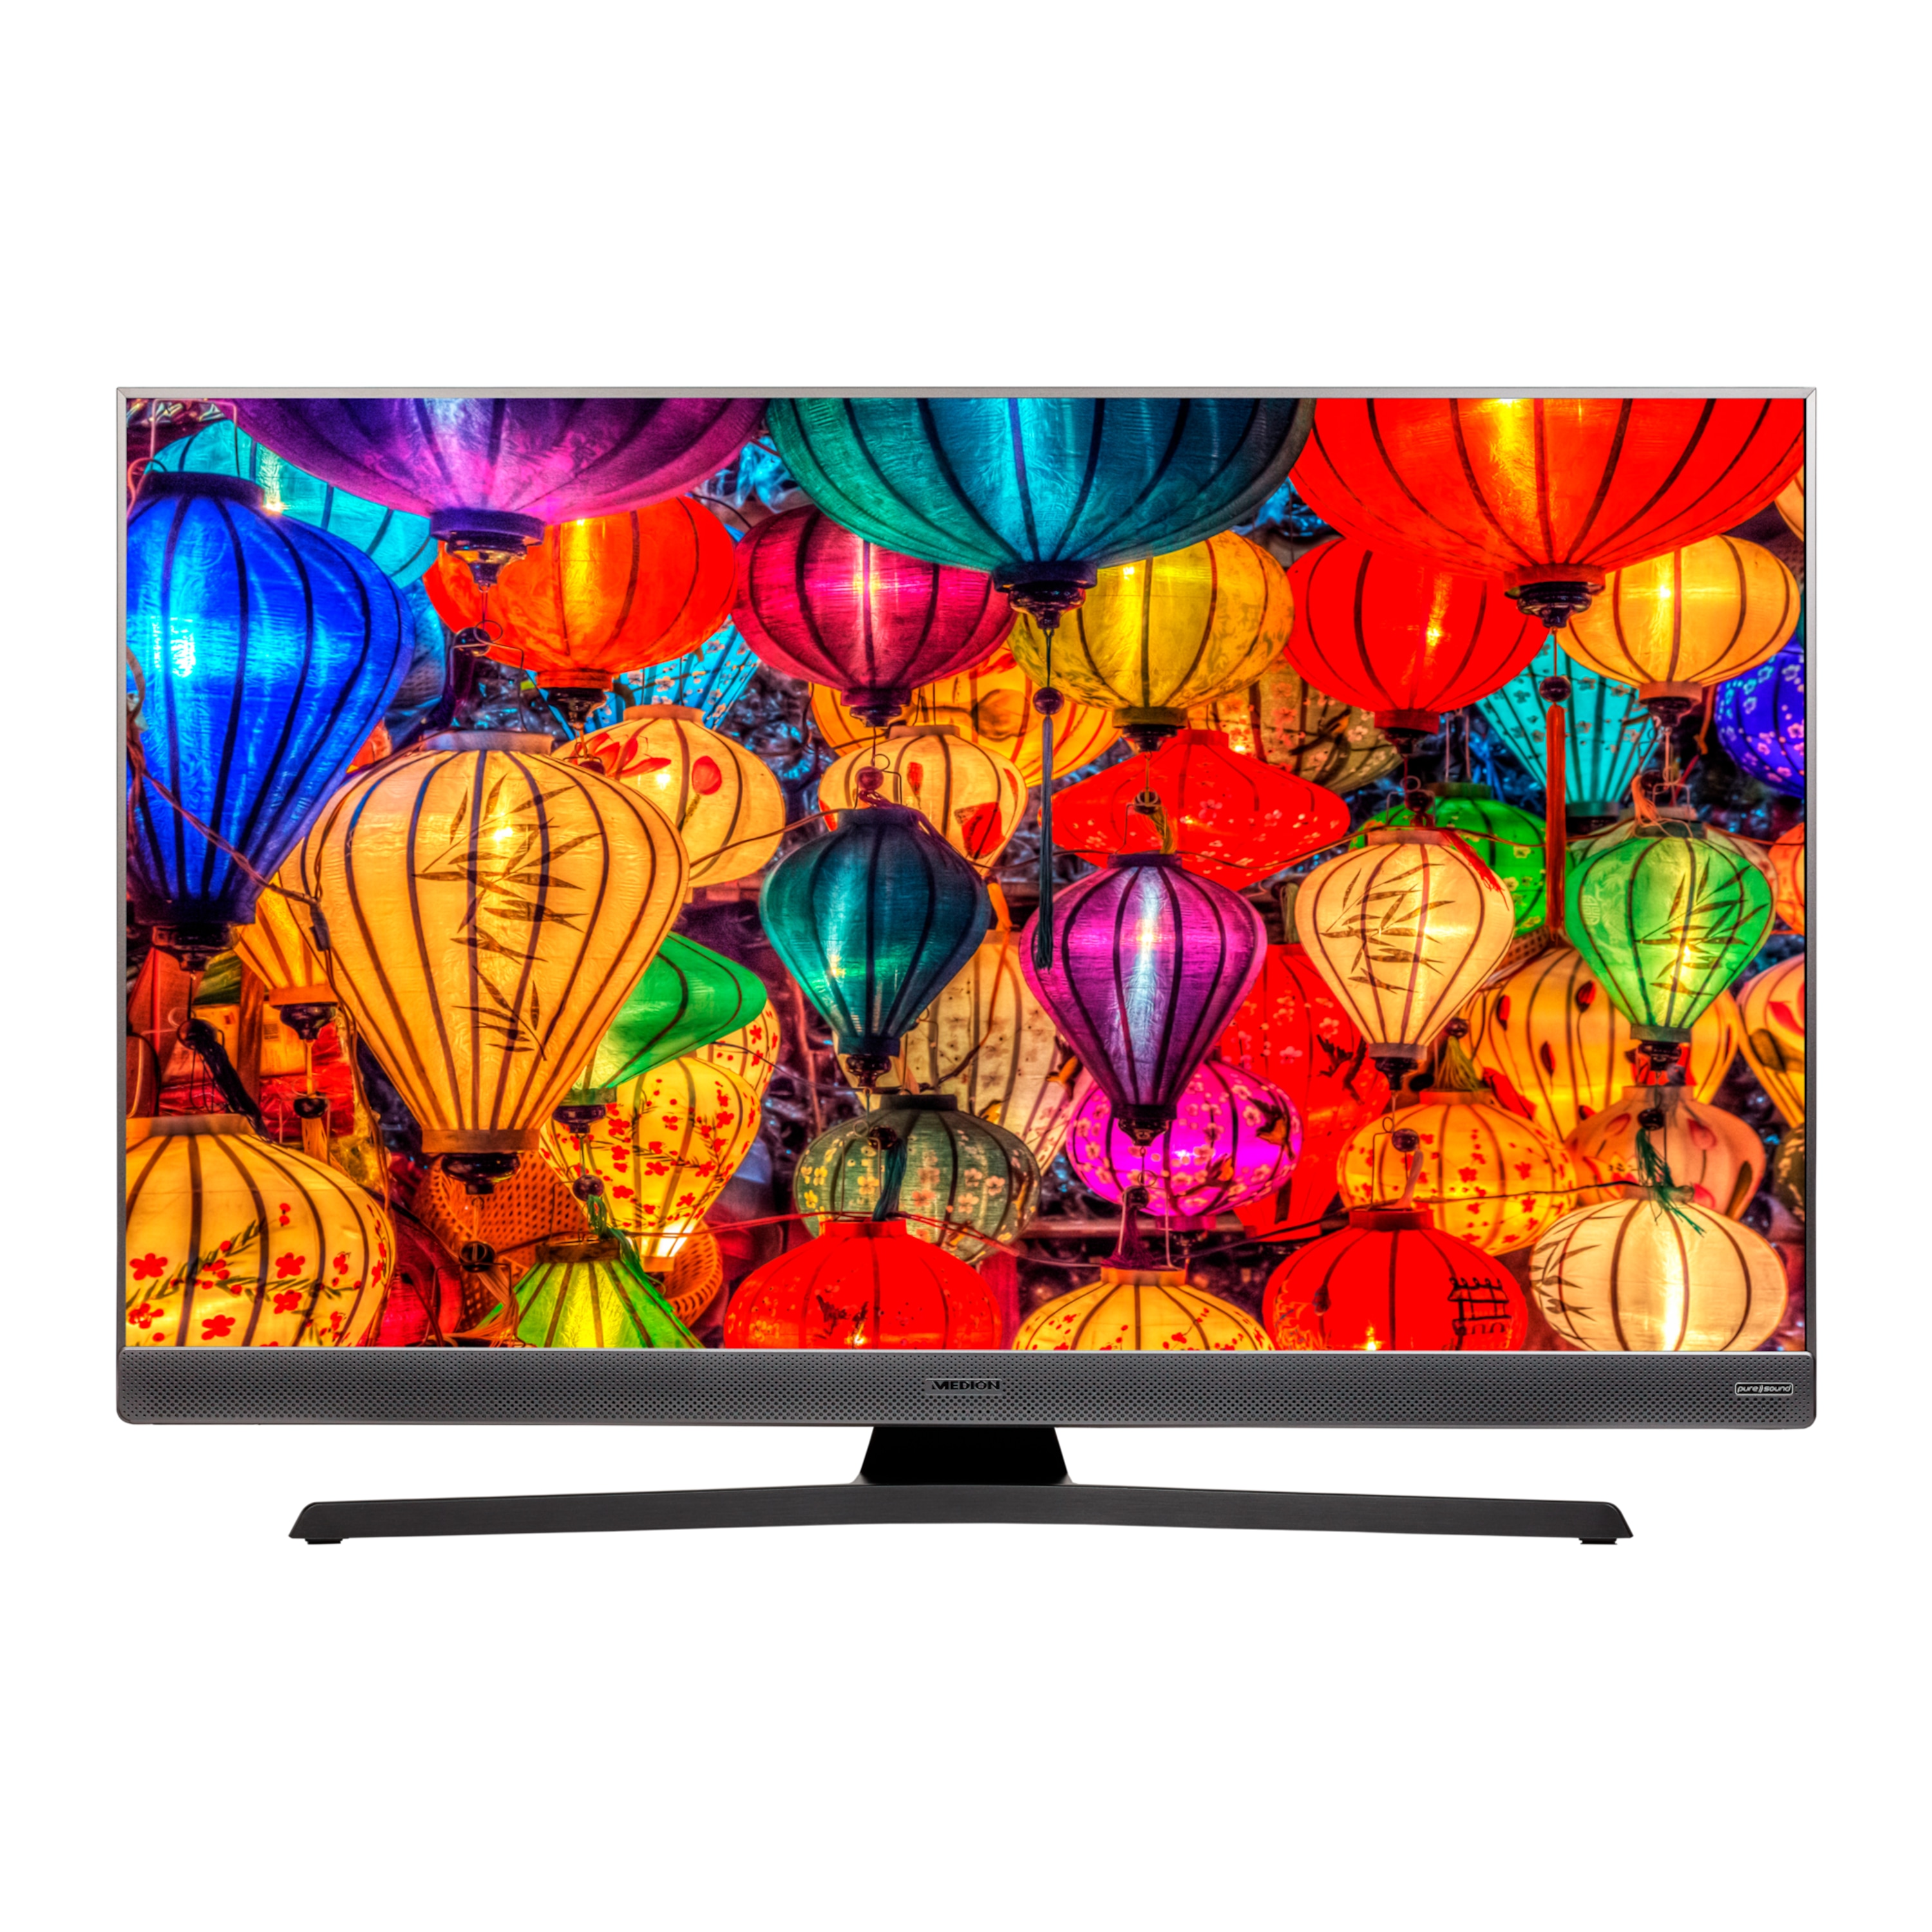 MEDION® LIFE® S14900 Smart-TV, 123,2 cm (49'') Ultra HD Display, HDR, PVR ready, Netflix, Bluetooth®, DTS HD, HD Triple Tuner, CI+